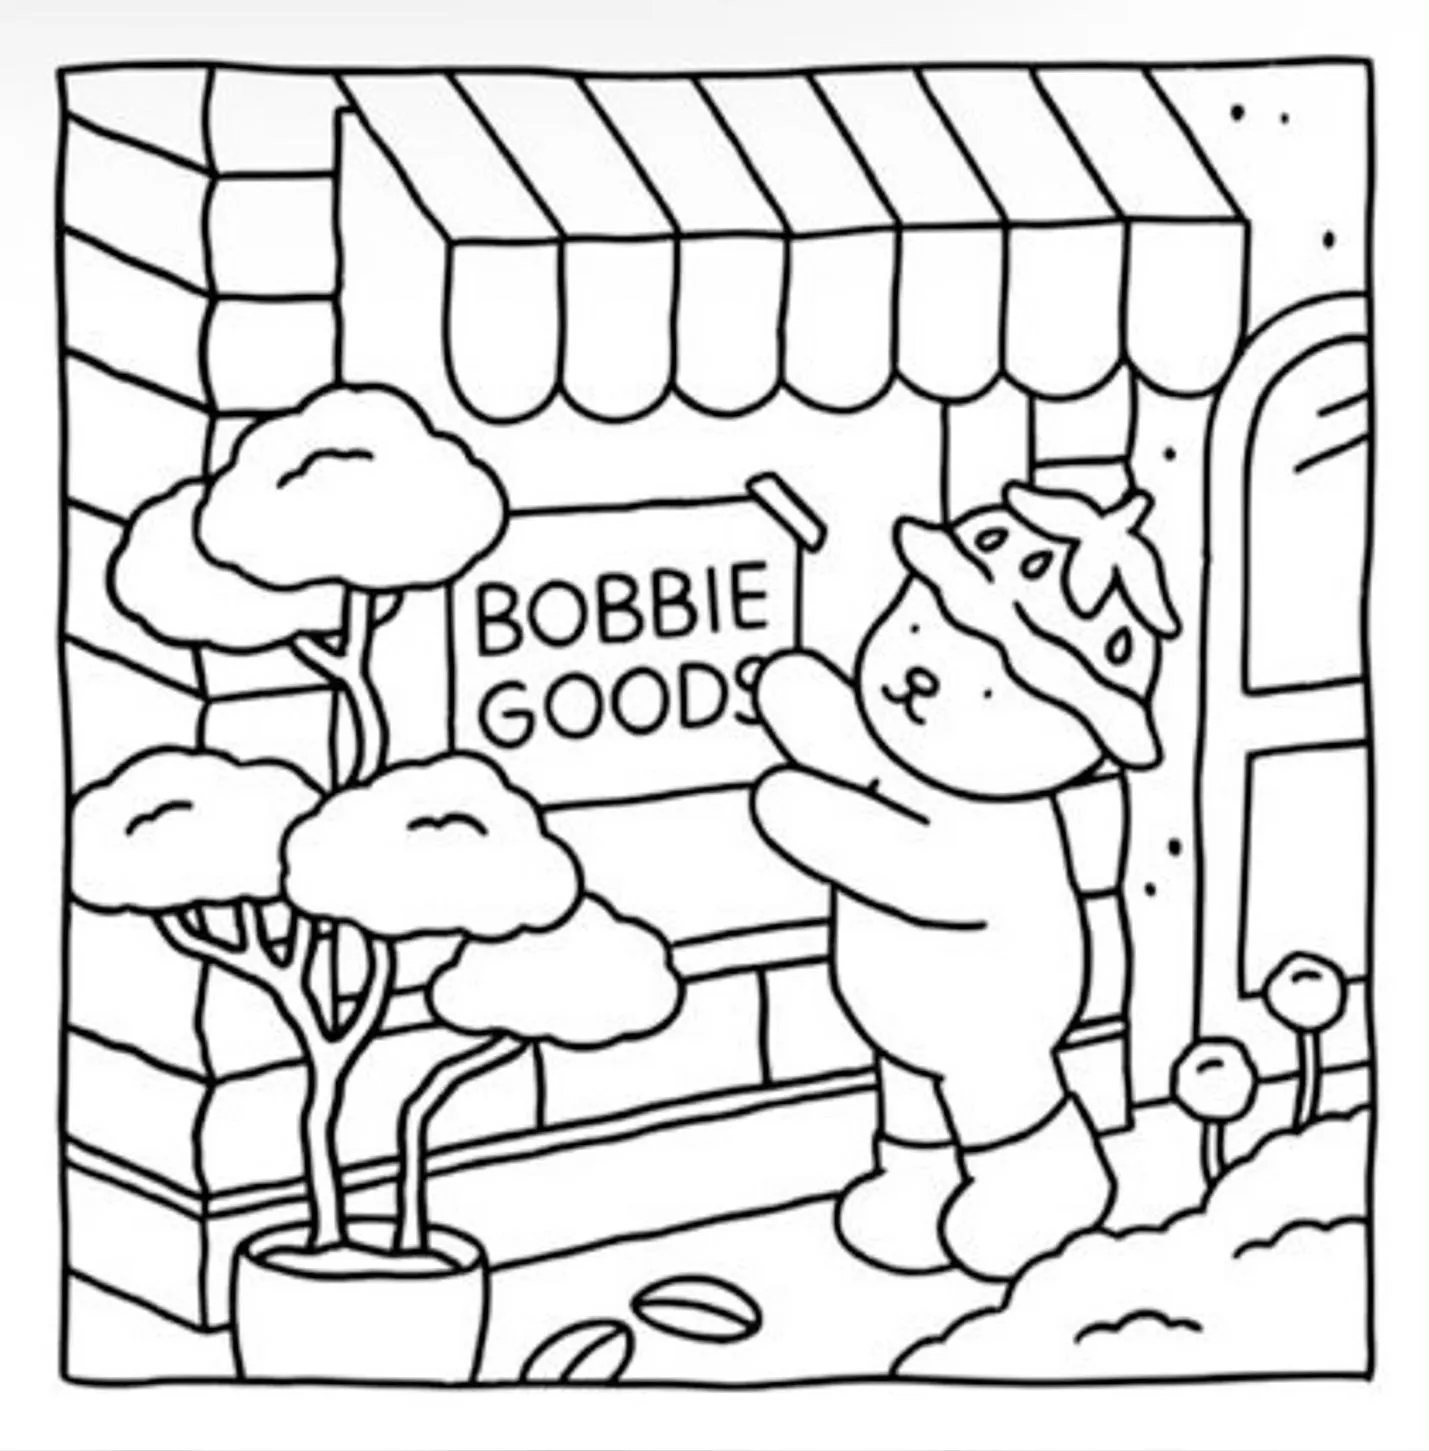 Bobbie Goods Coloring Pages 62